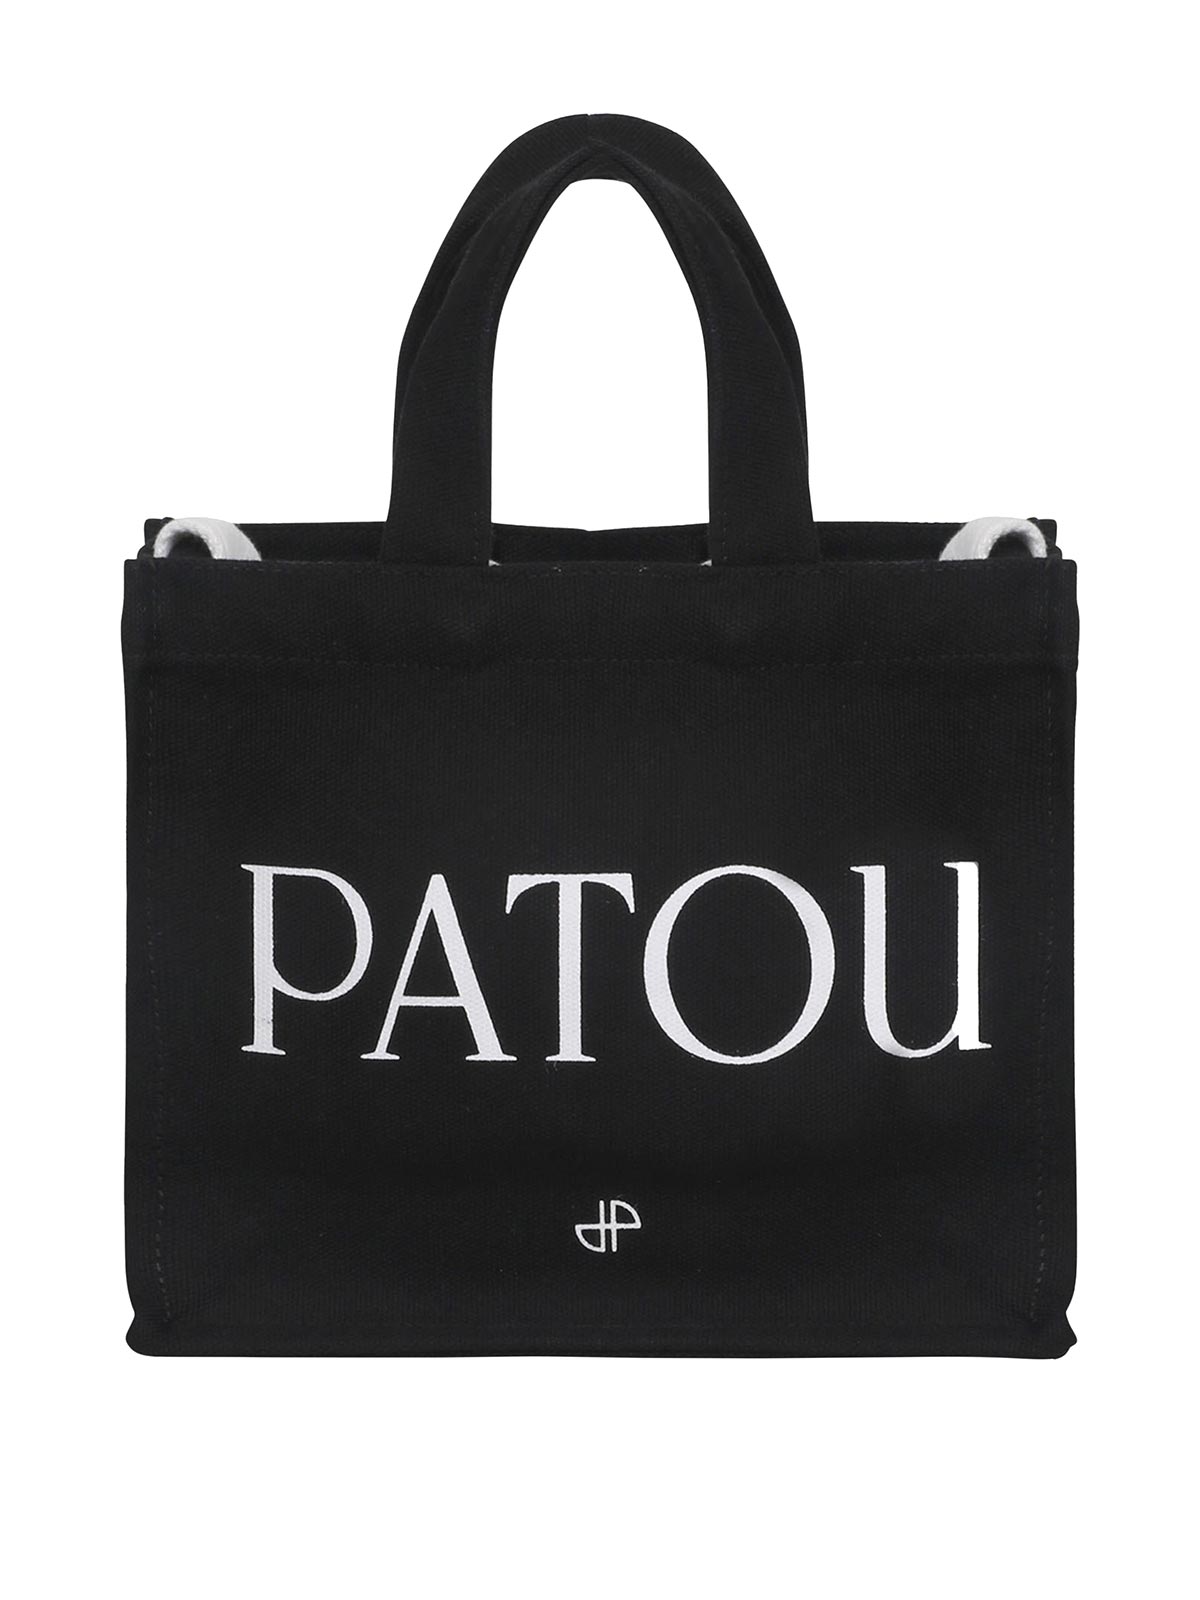 Patou Small Tote Bag In Black